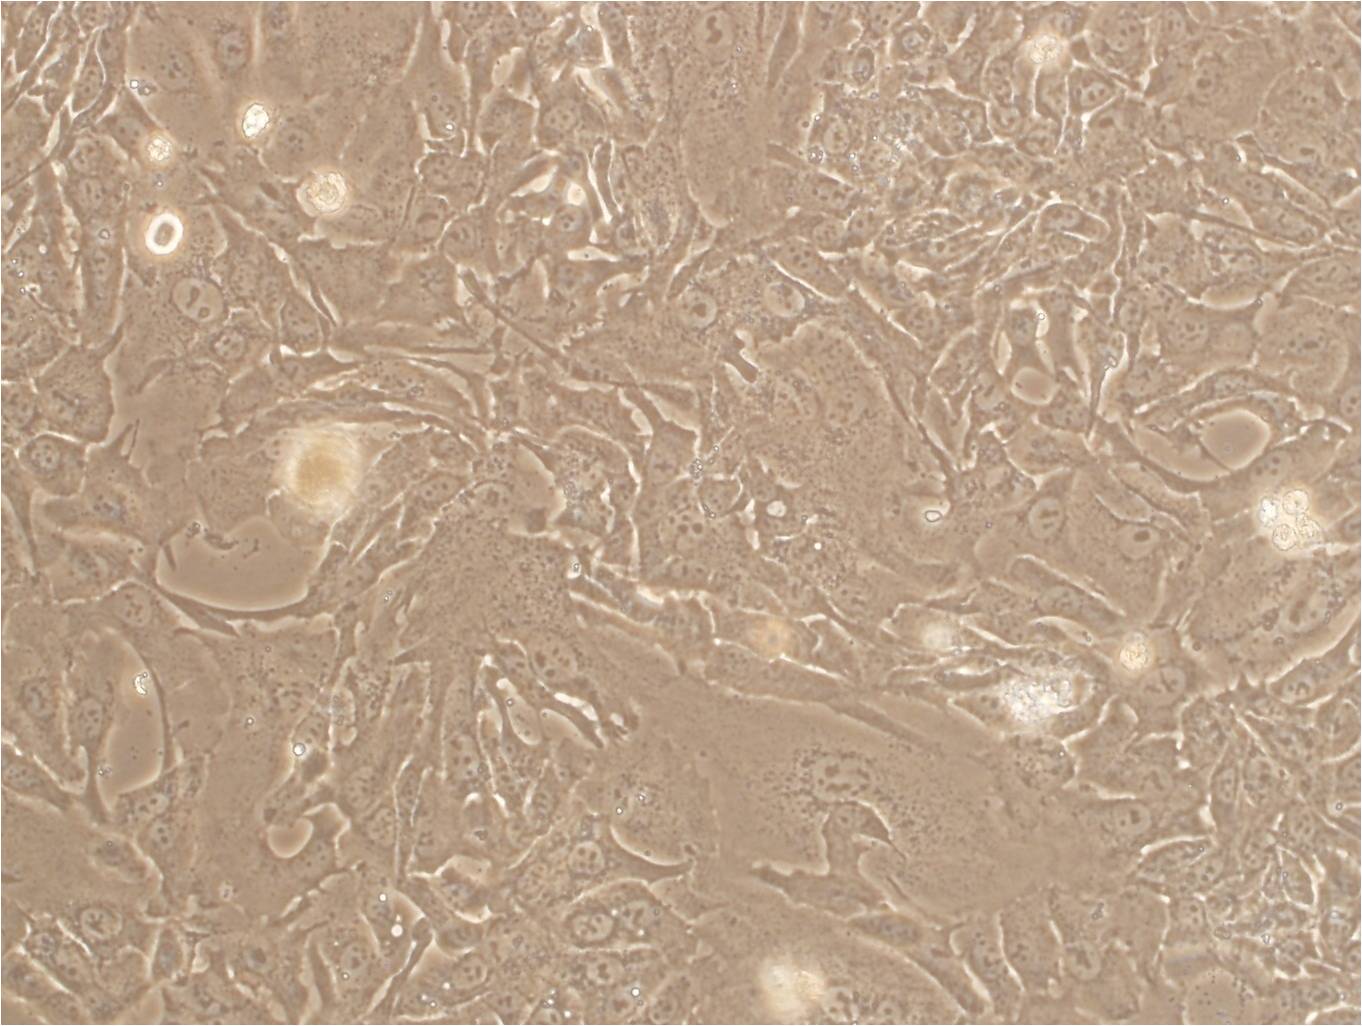 OVTOKO epithelioid cells人卵巢透明细胞癌细胞系,OVTOKO epithelioid cells